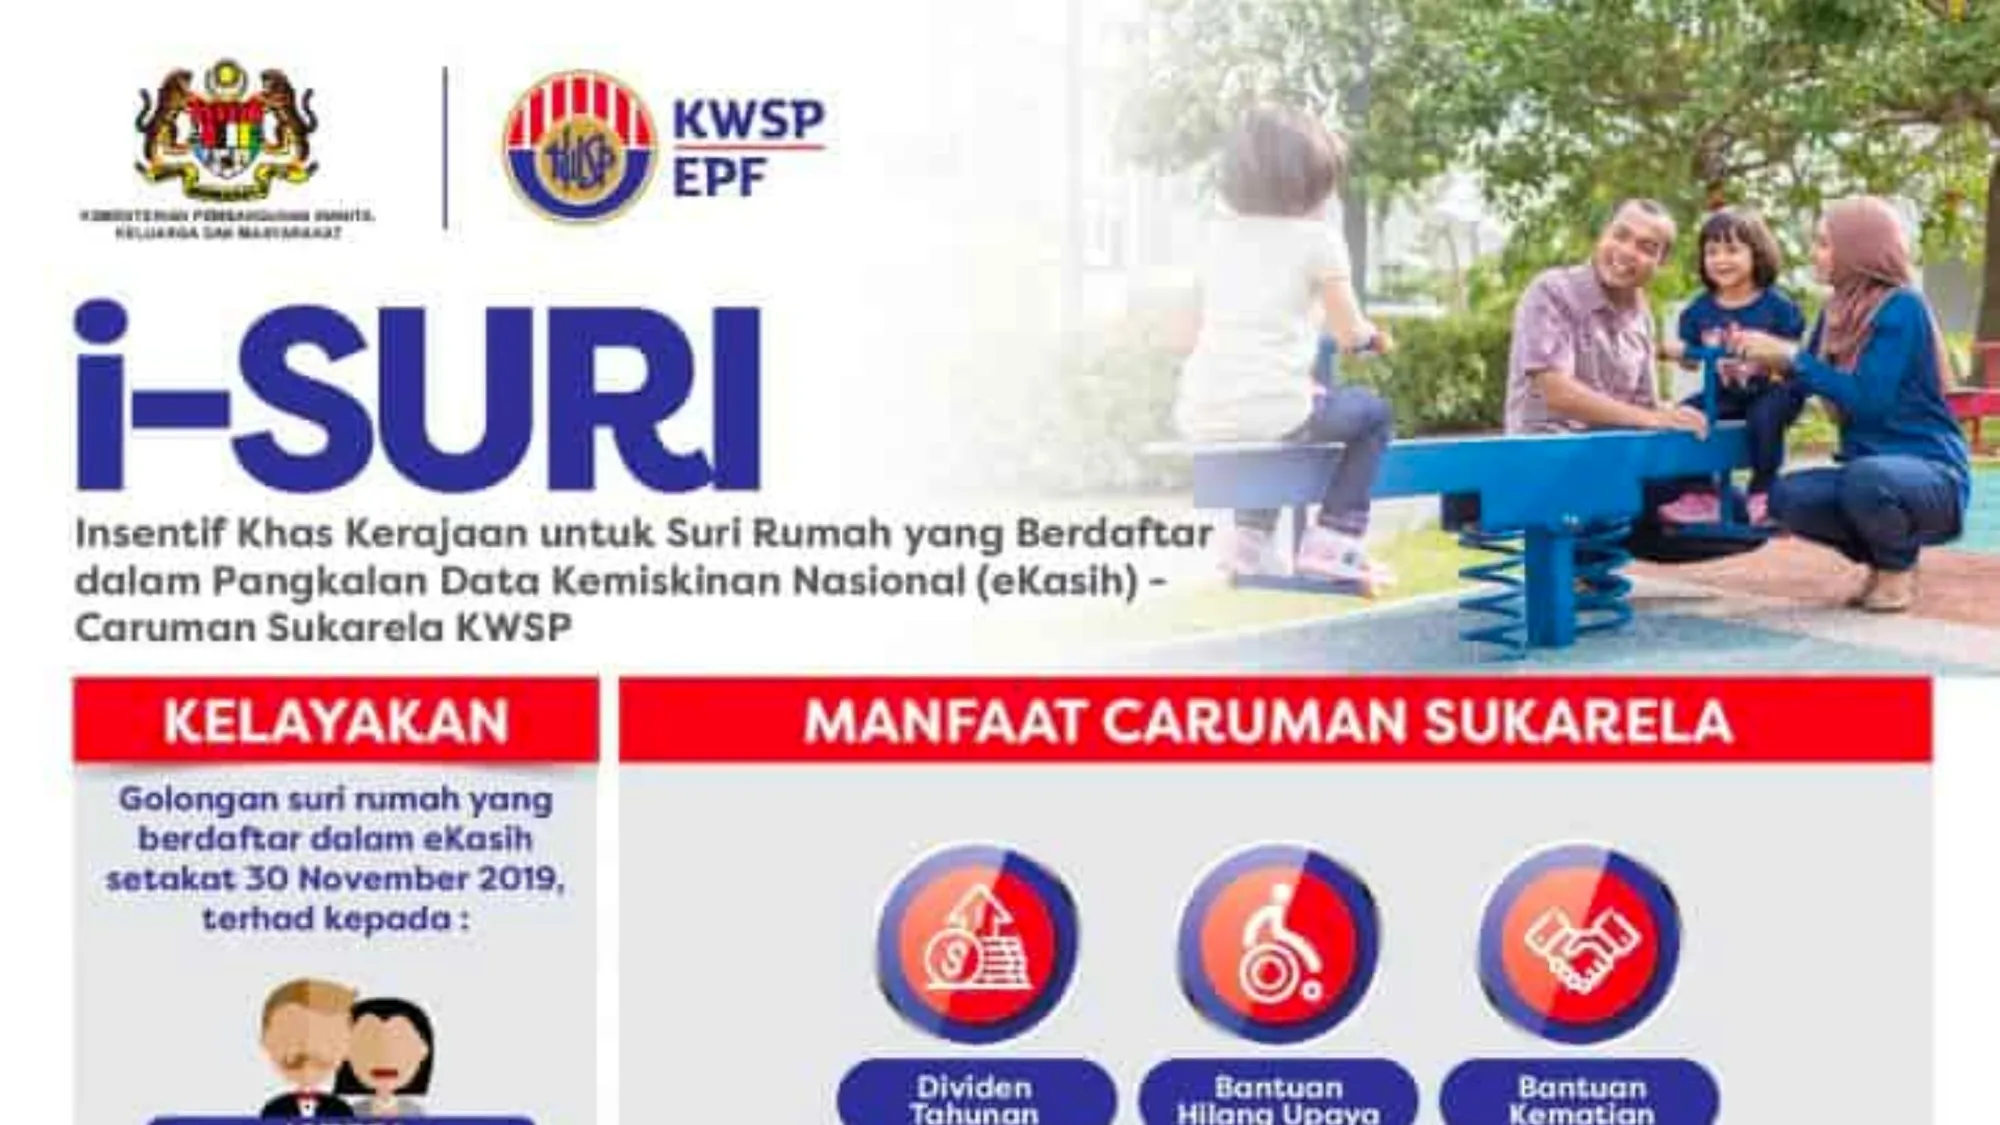 how to pay isuri isaraan epf using public bank